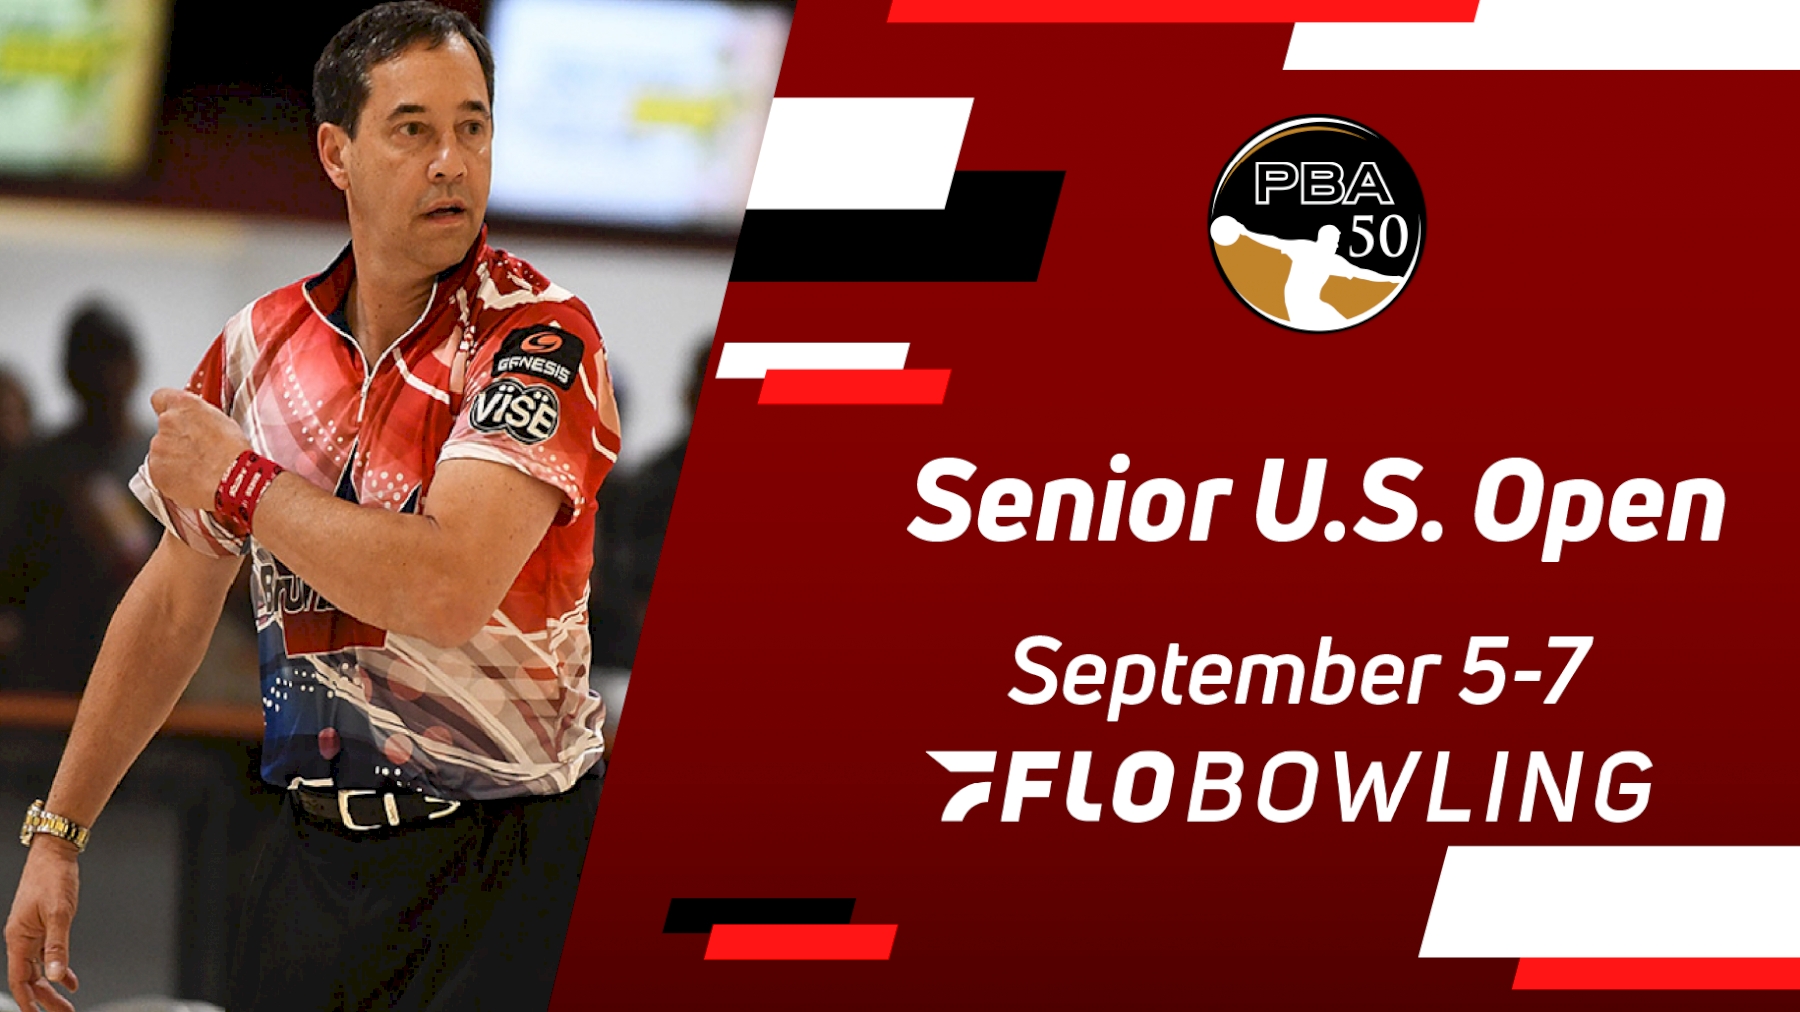 2021 PBA50 Senior U.S. Open Bowling Event FloBowling